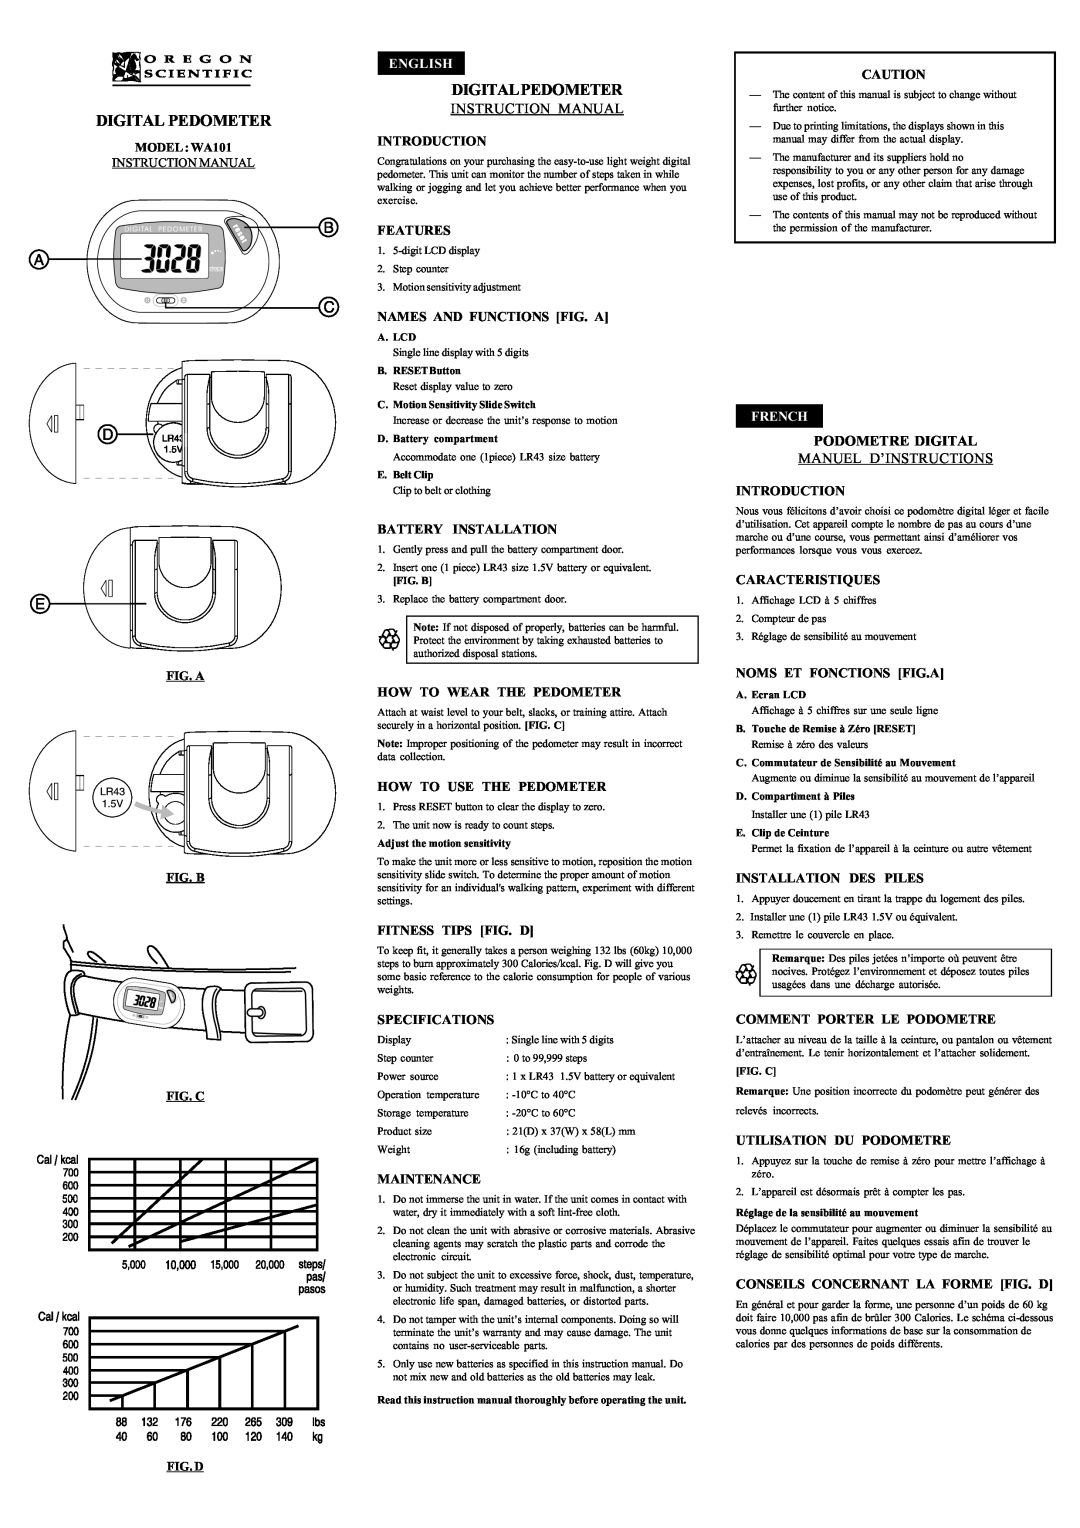 Oregon Scientific WA101 instruction manual Podometre Digital, Manuel D’Instructions, English, French, Digital Pedometer 